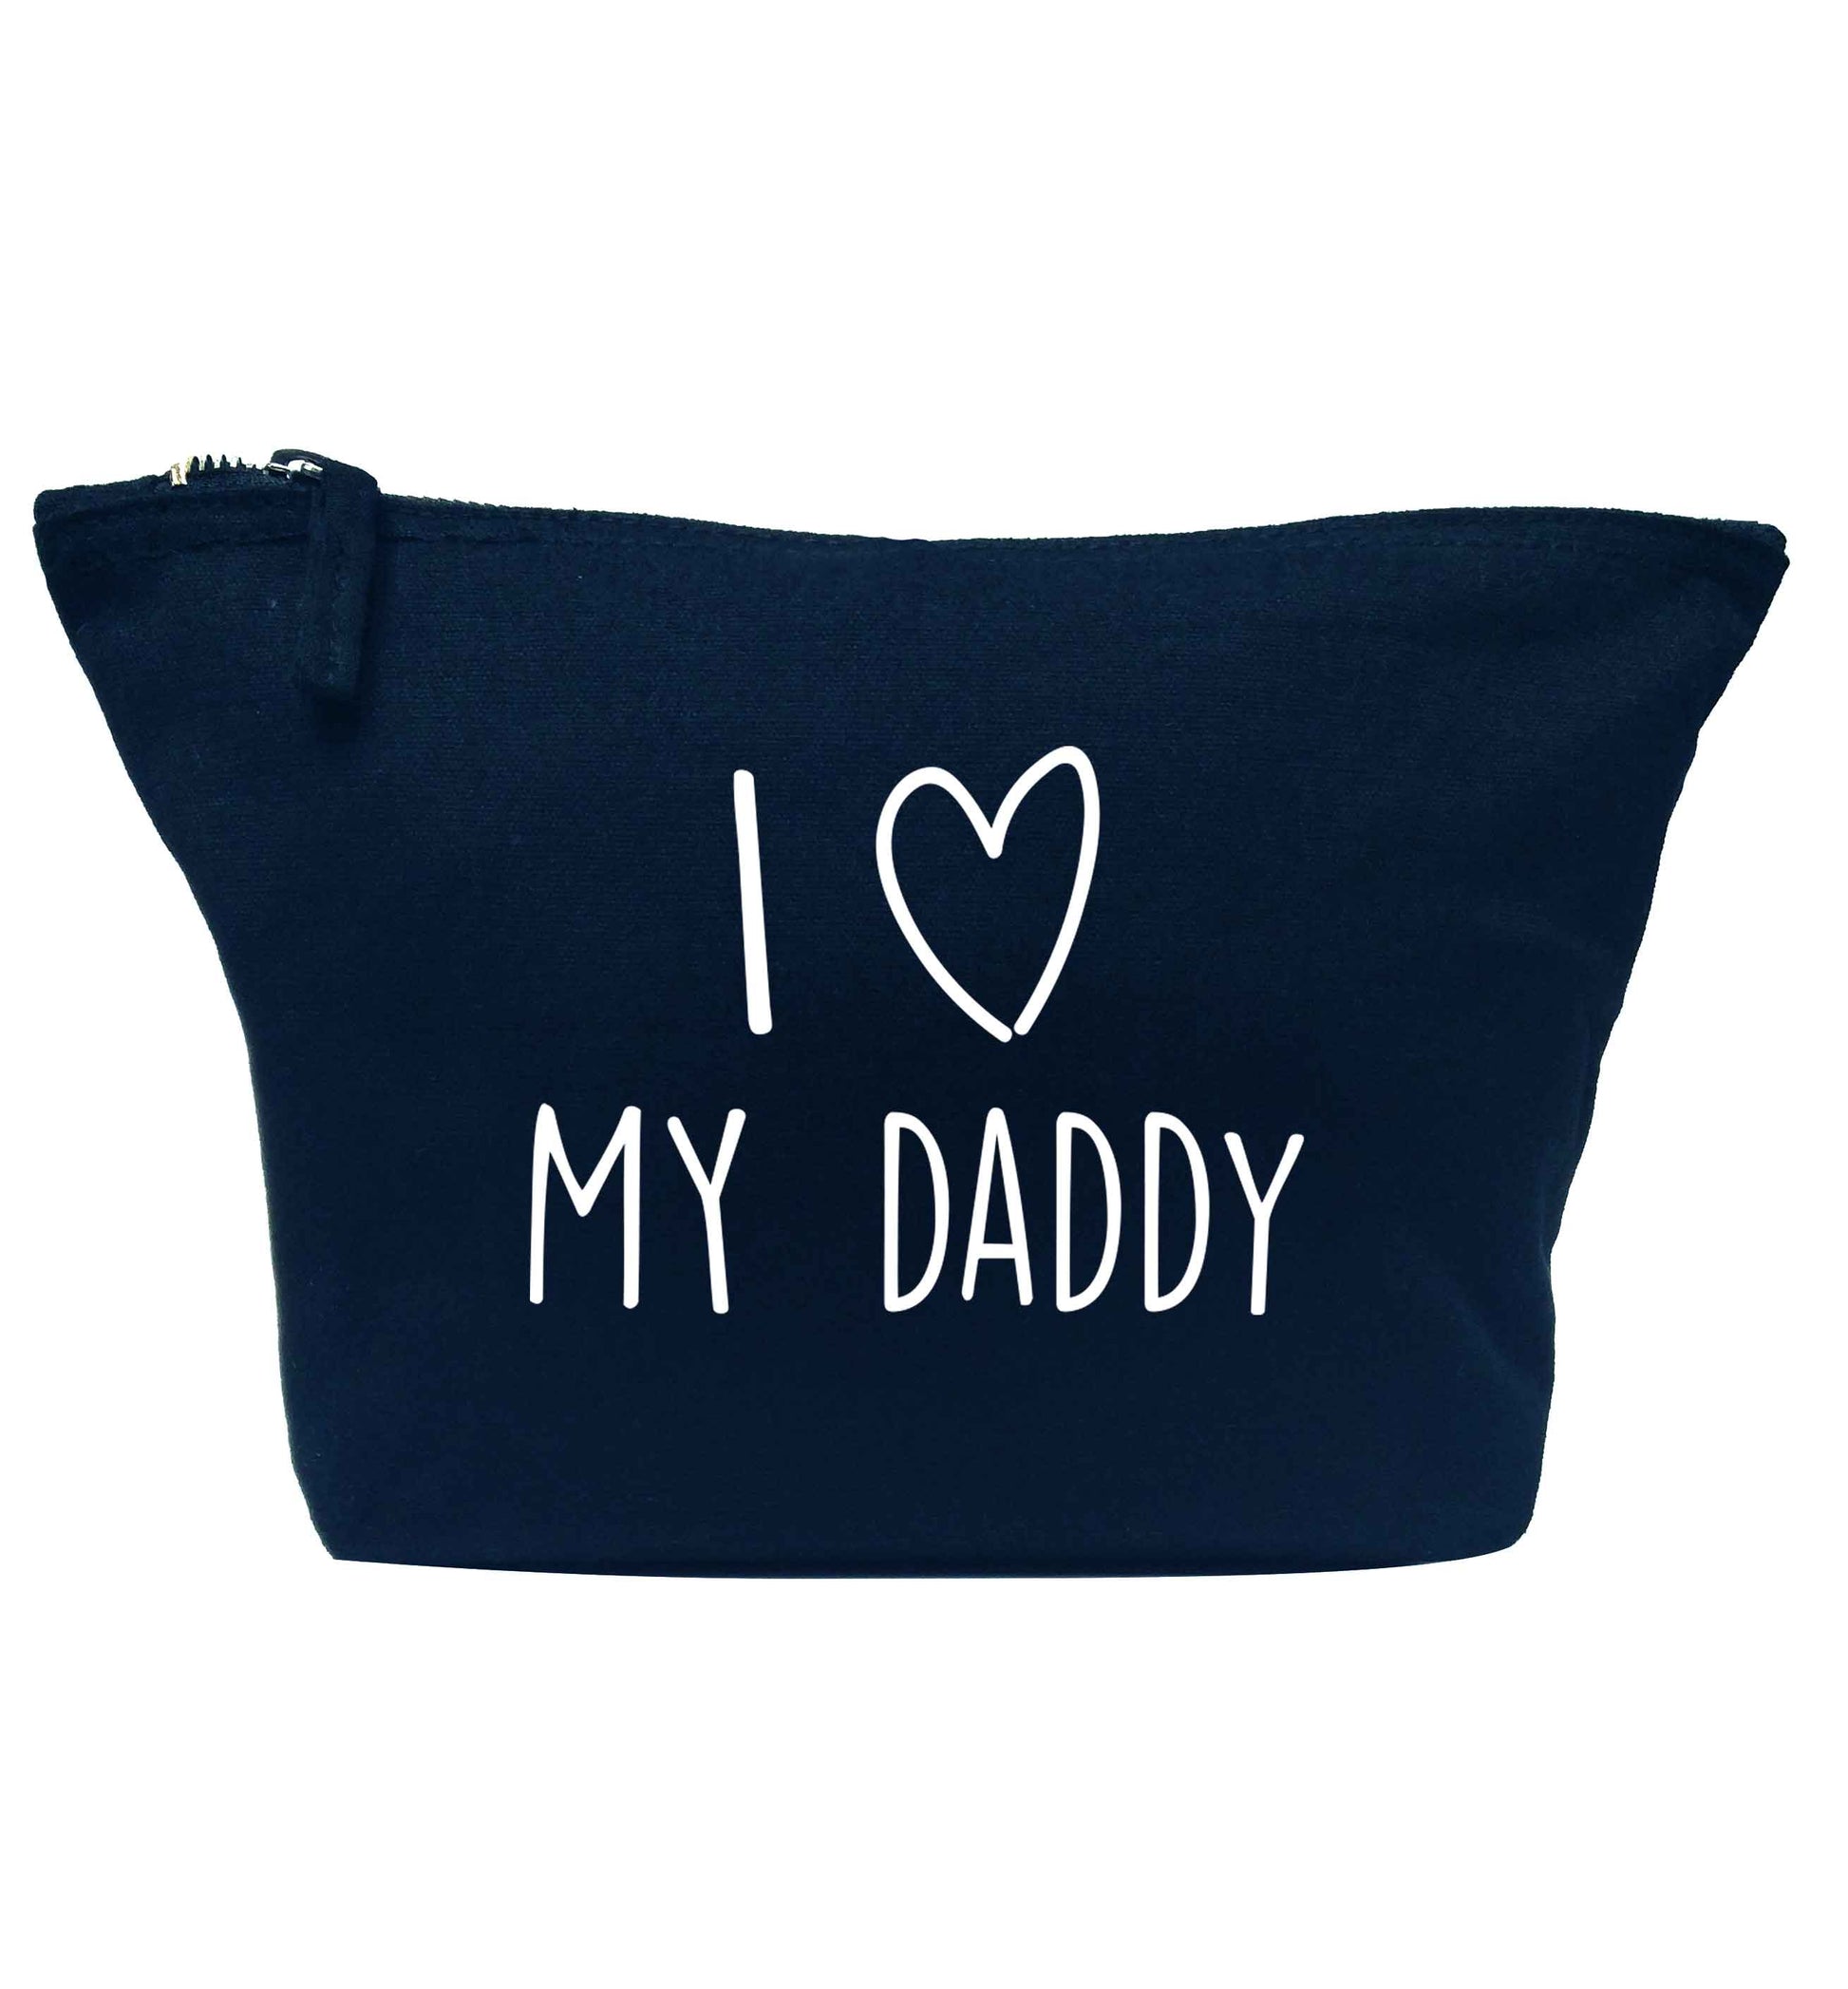 I love my daddy navy makeup bag